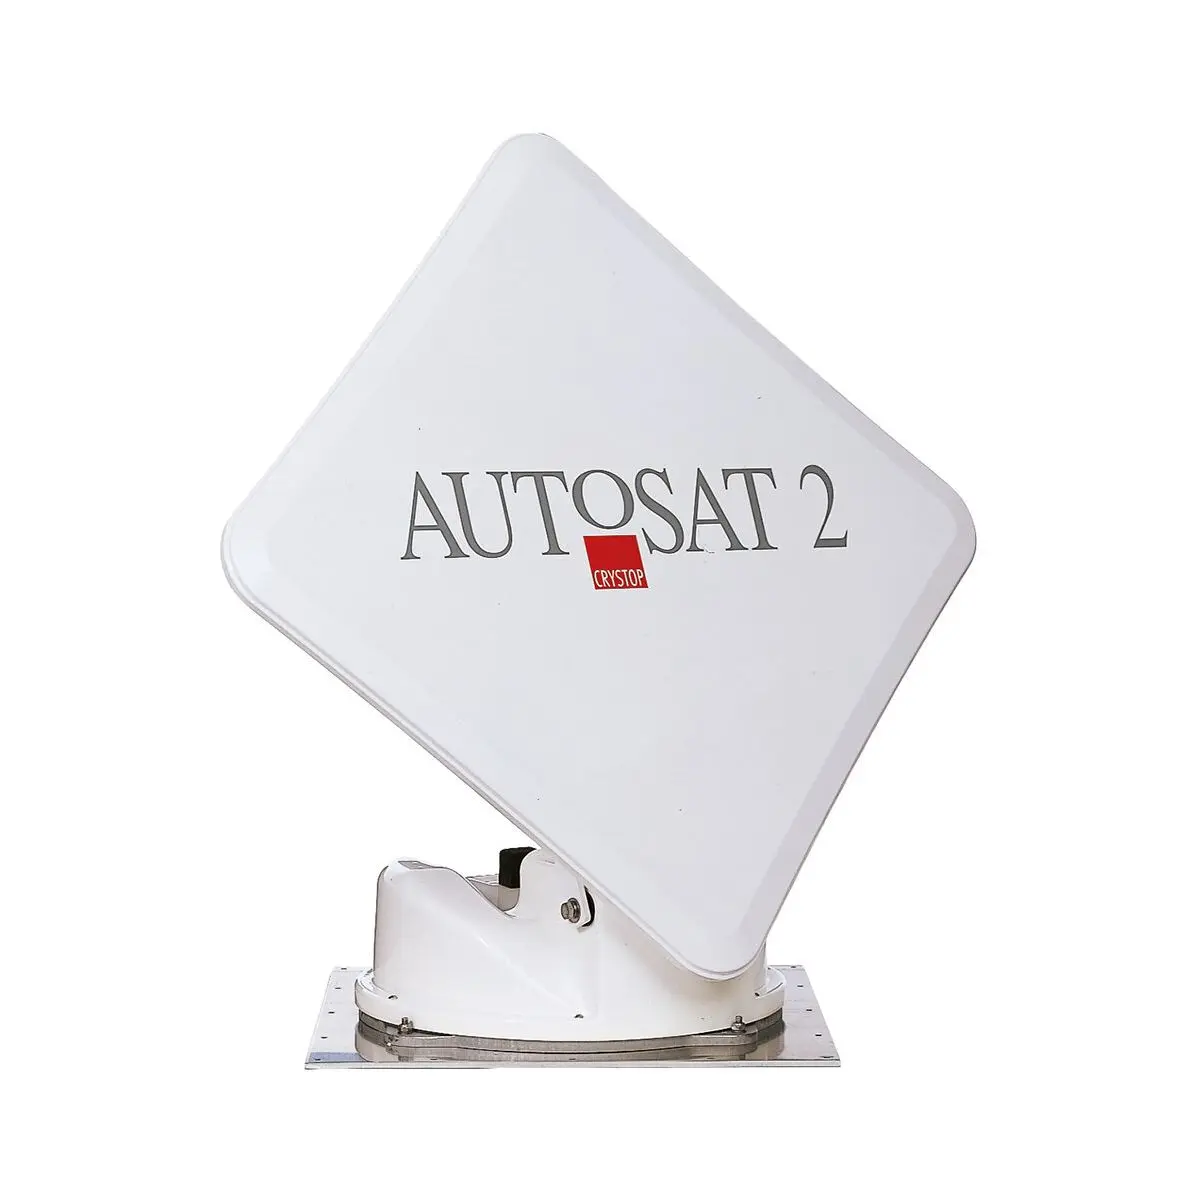 AutoSat 2F Control Twin műholdas rendszer